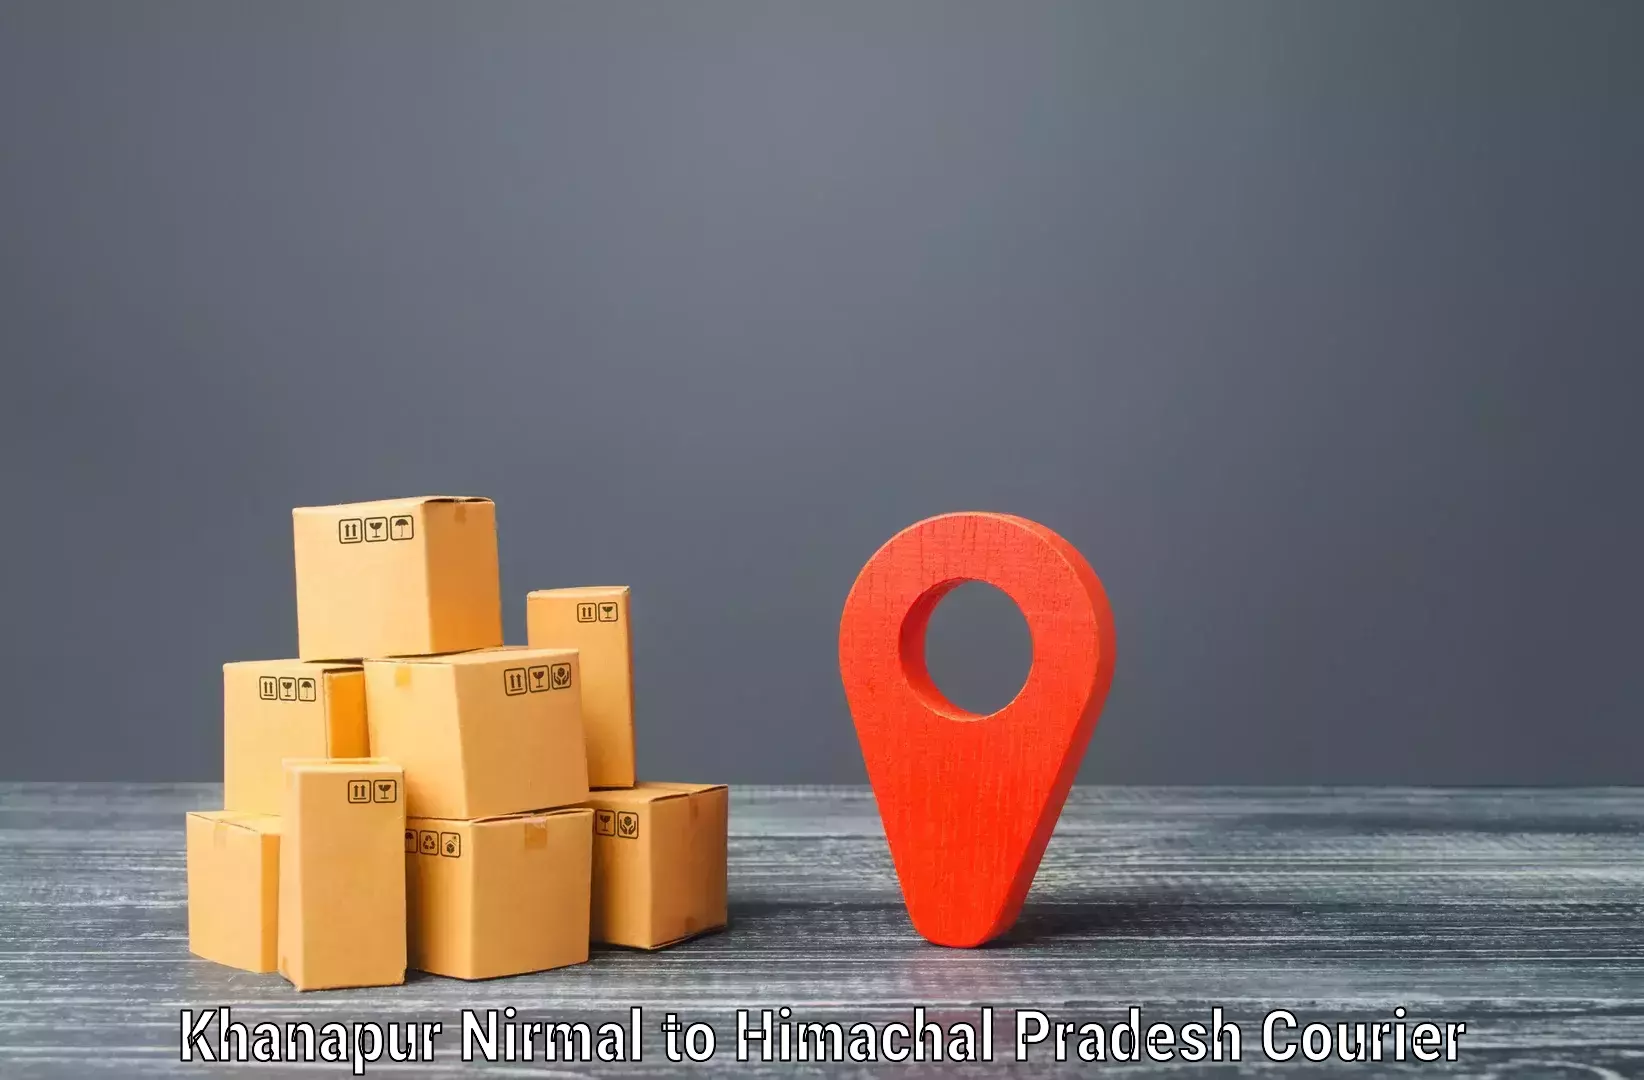 Courier service innovation Khanapur Nirmal to Baijnath